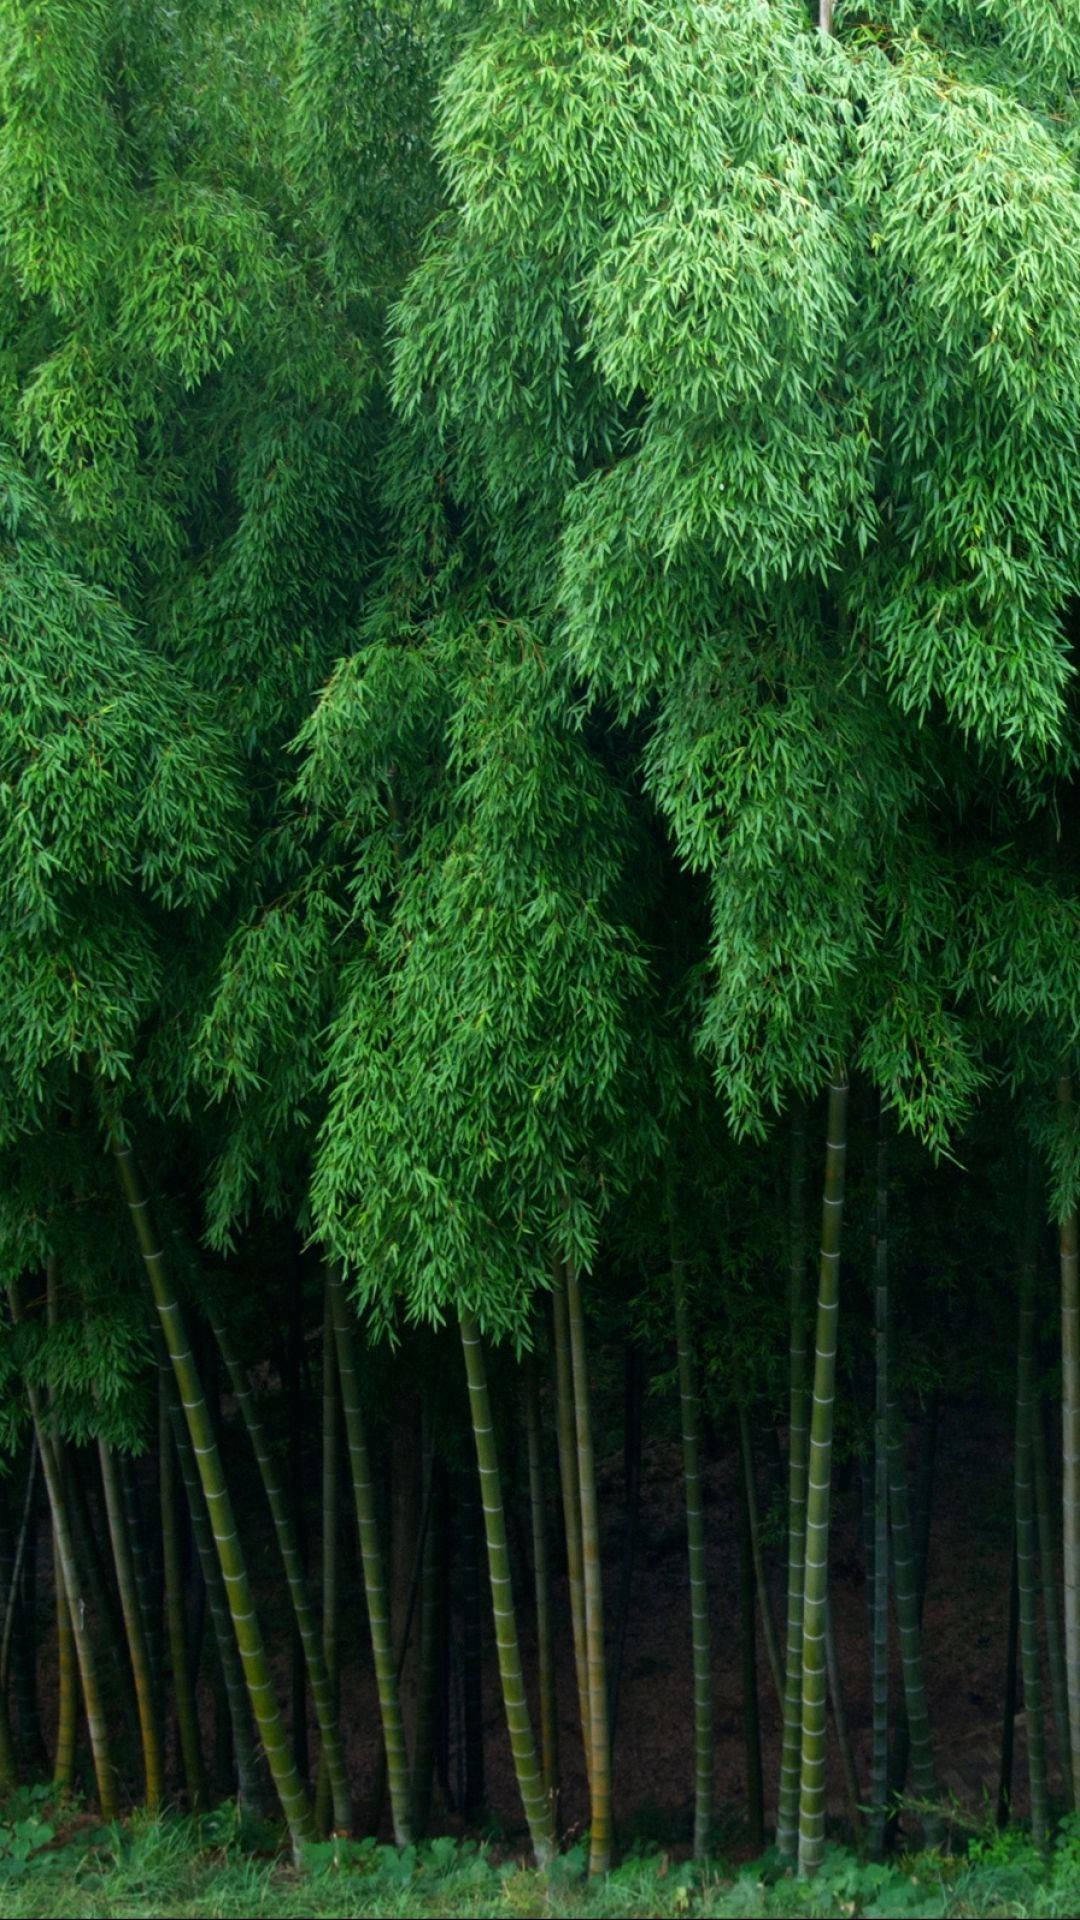 Wallpaperlummig Bambuskog Iphone-bakgrundsbild. Wallpaper